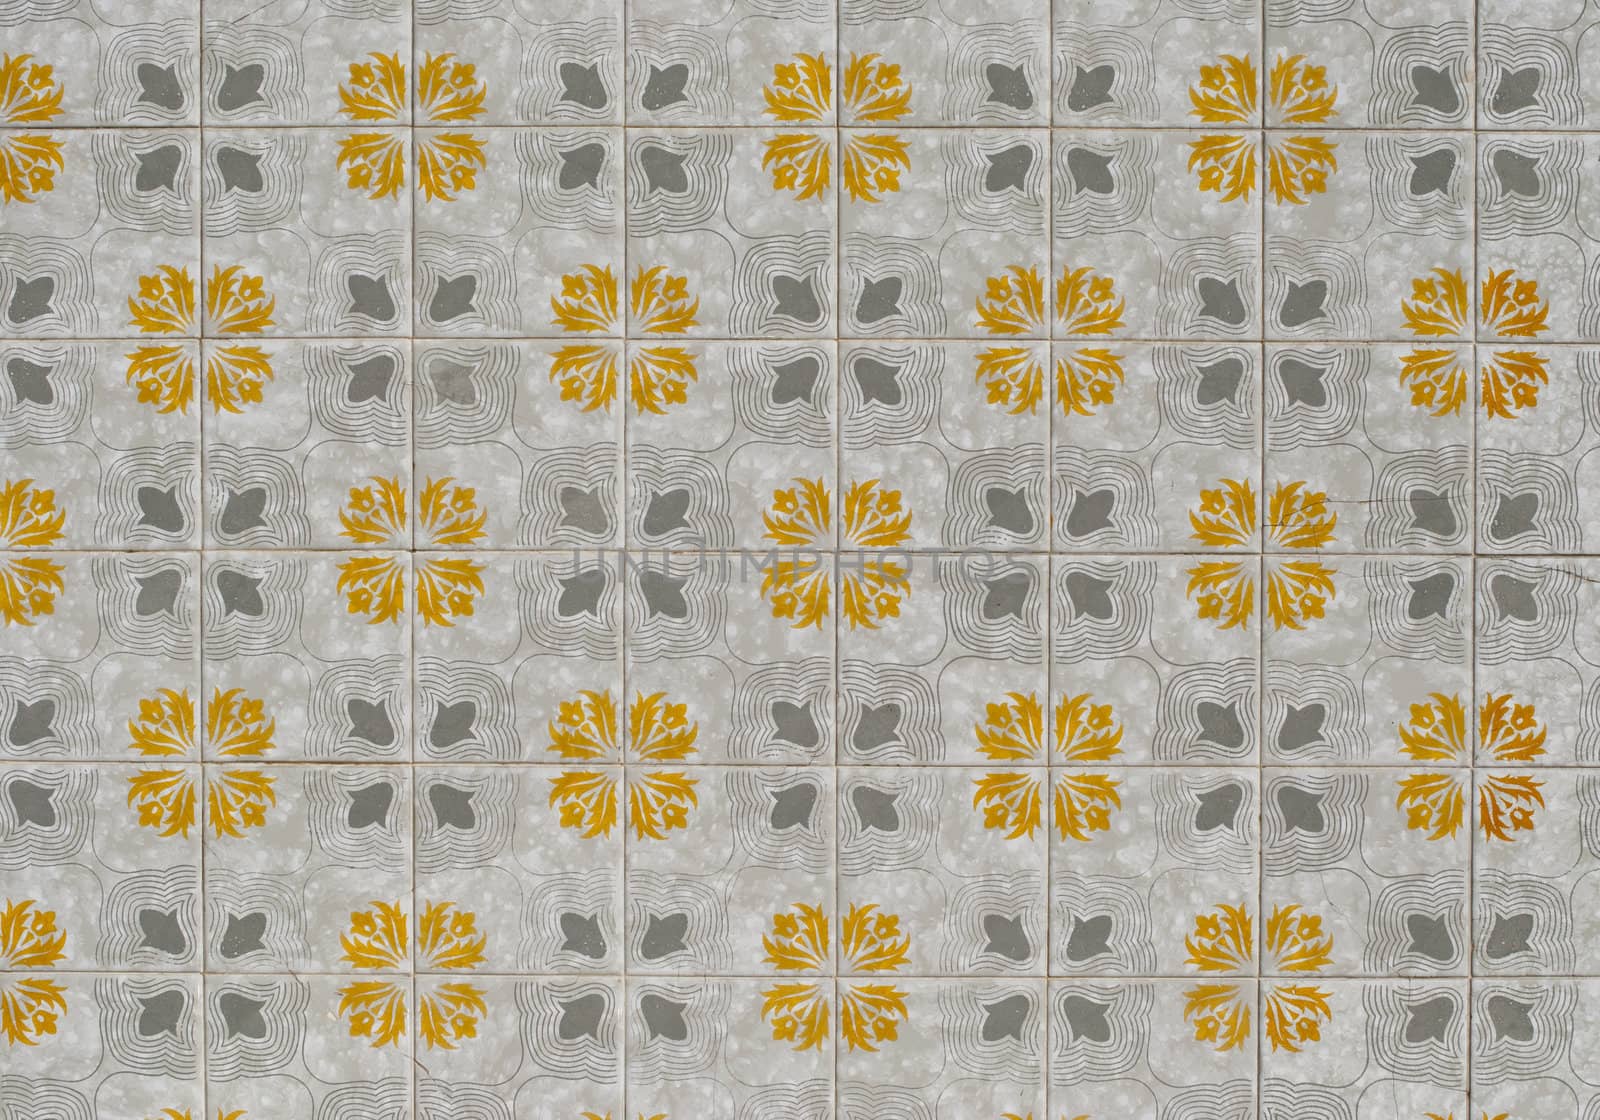 Portuguese glazed tiles 193 by homydesign